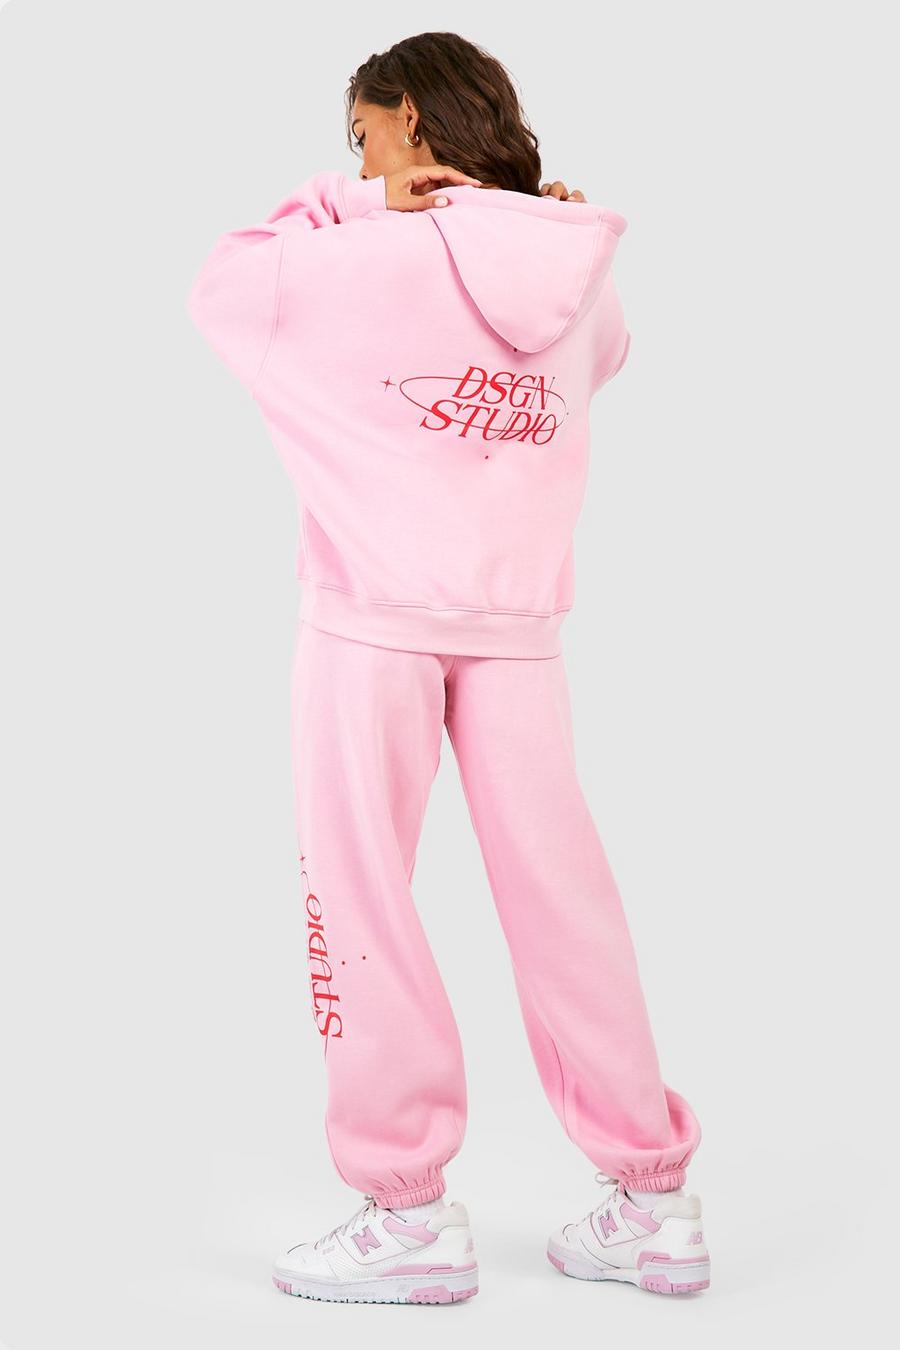 Trainingsanzug mit Kapuze und Dsgn Studio Slogan, Light pink